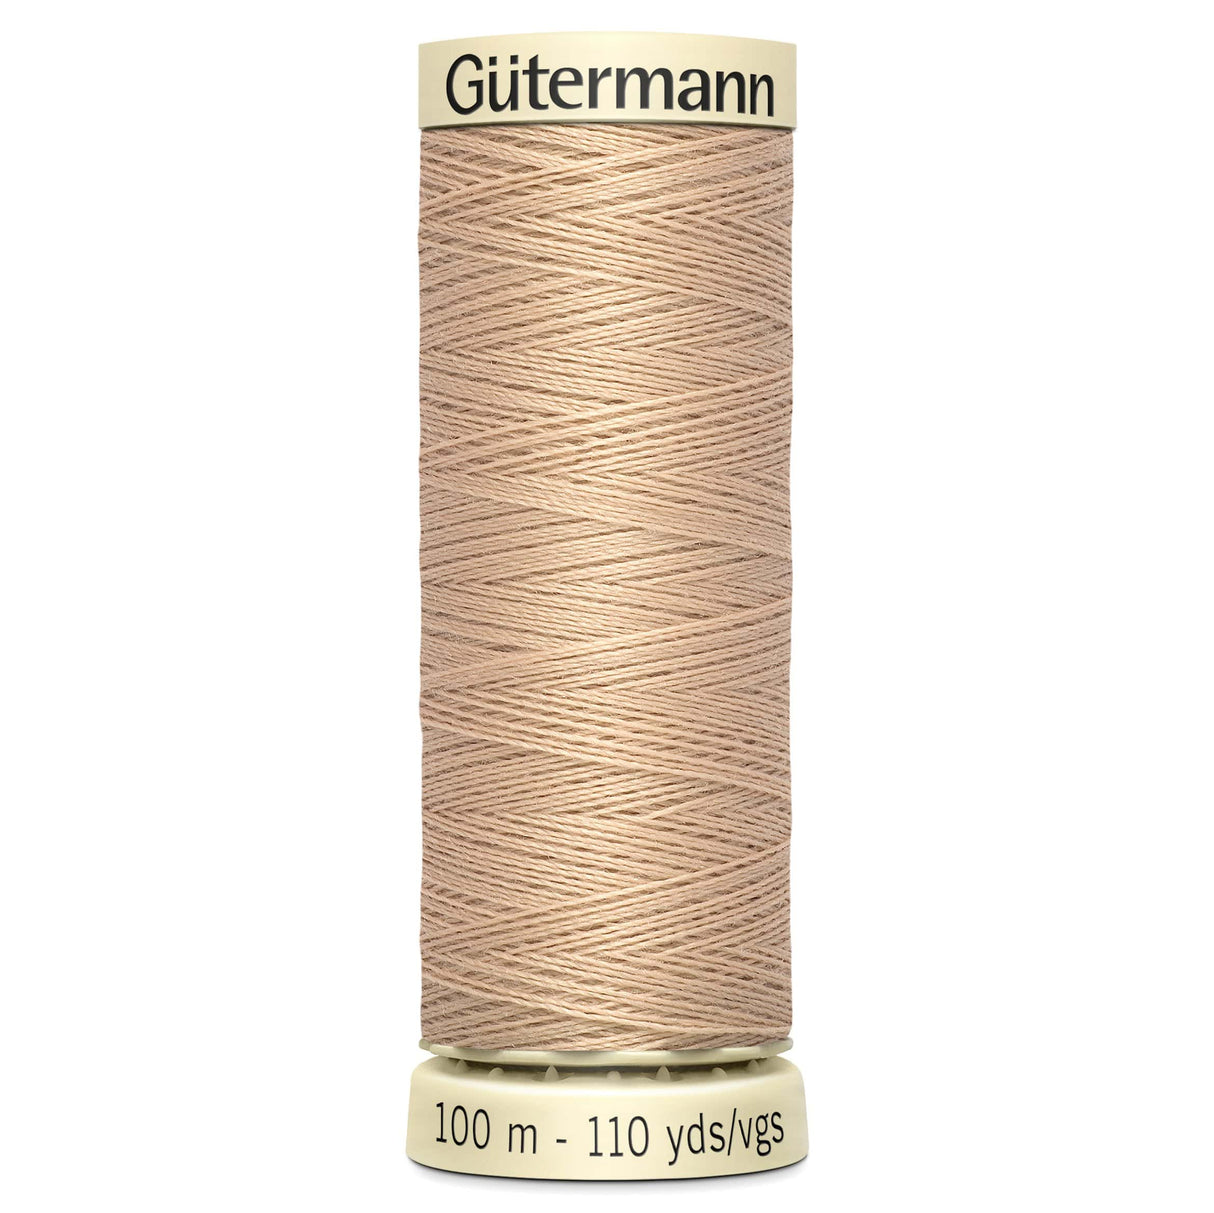 Groves Haberdashery 170 Gutermann Thread Sewing Cotton 100 m Black to Pink